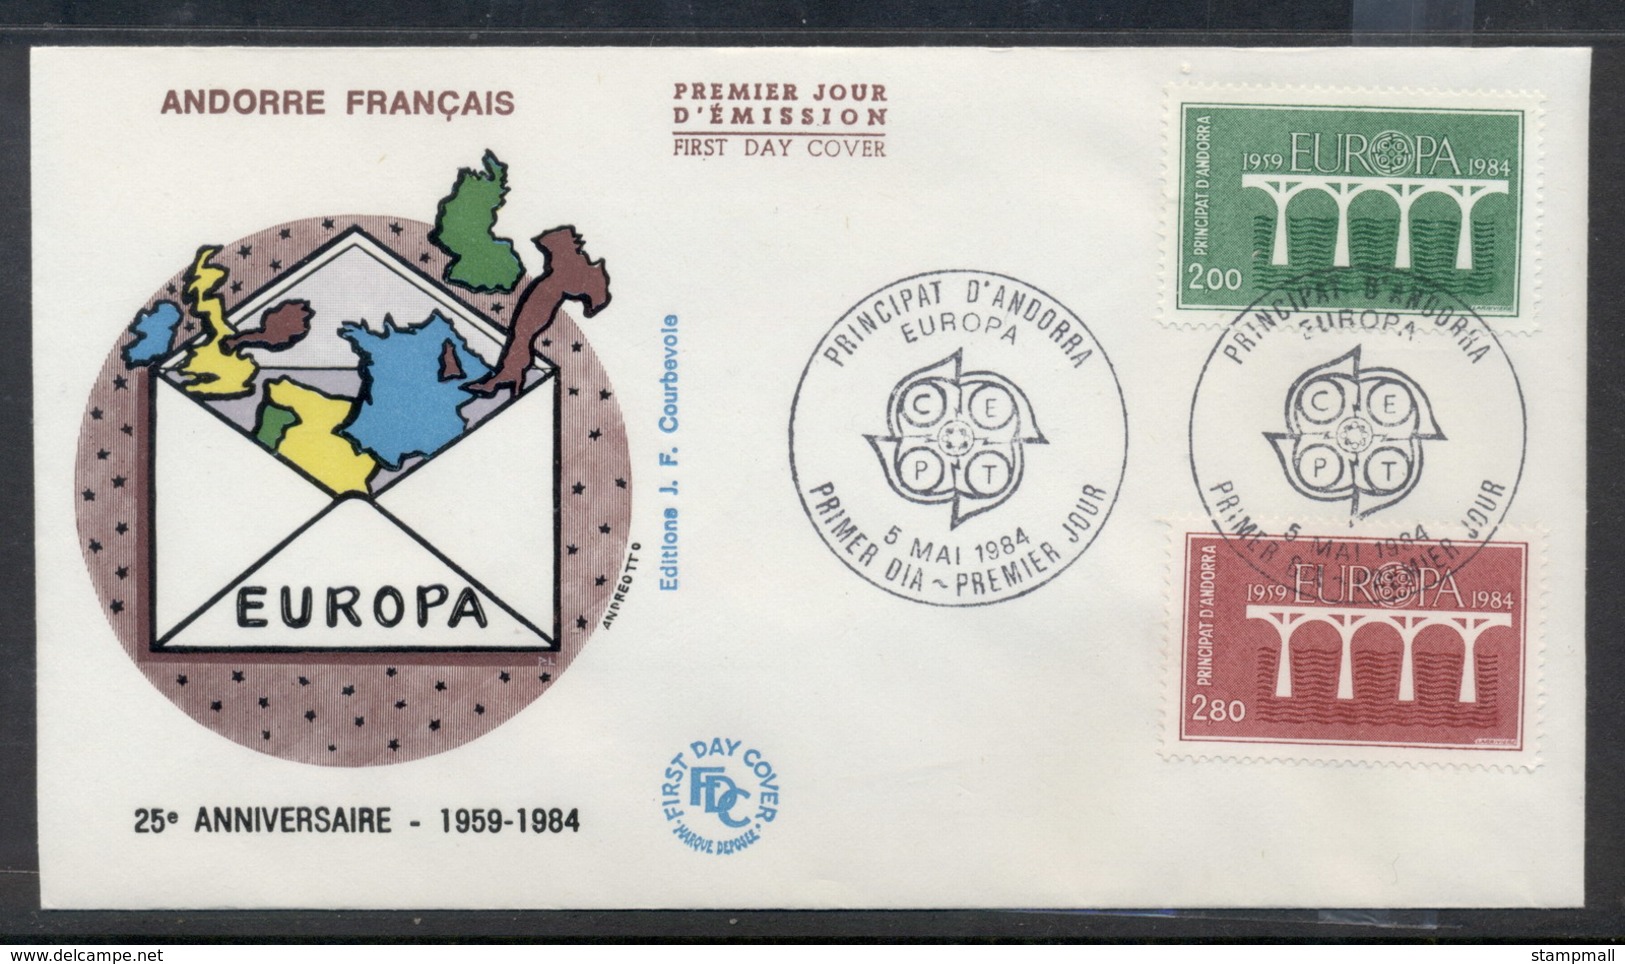 Andorra (Fr.) 1984 Europa Bridge FDC - Covers & Documents